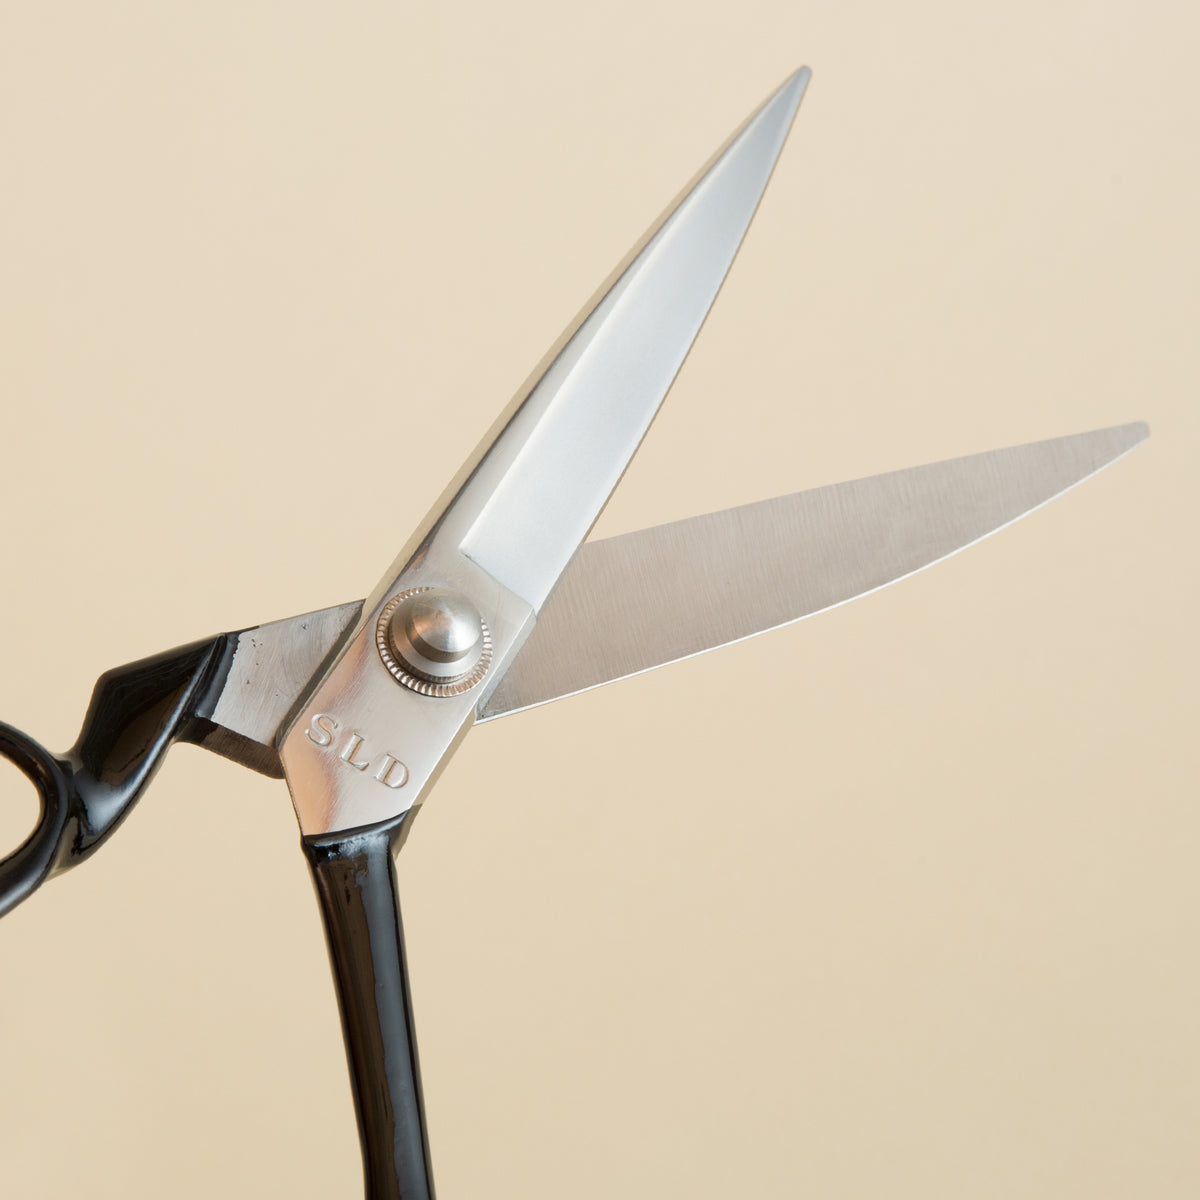 SLD Fabric Scissors – The Good Liver